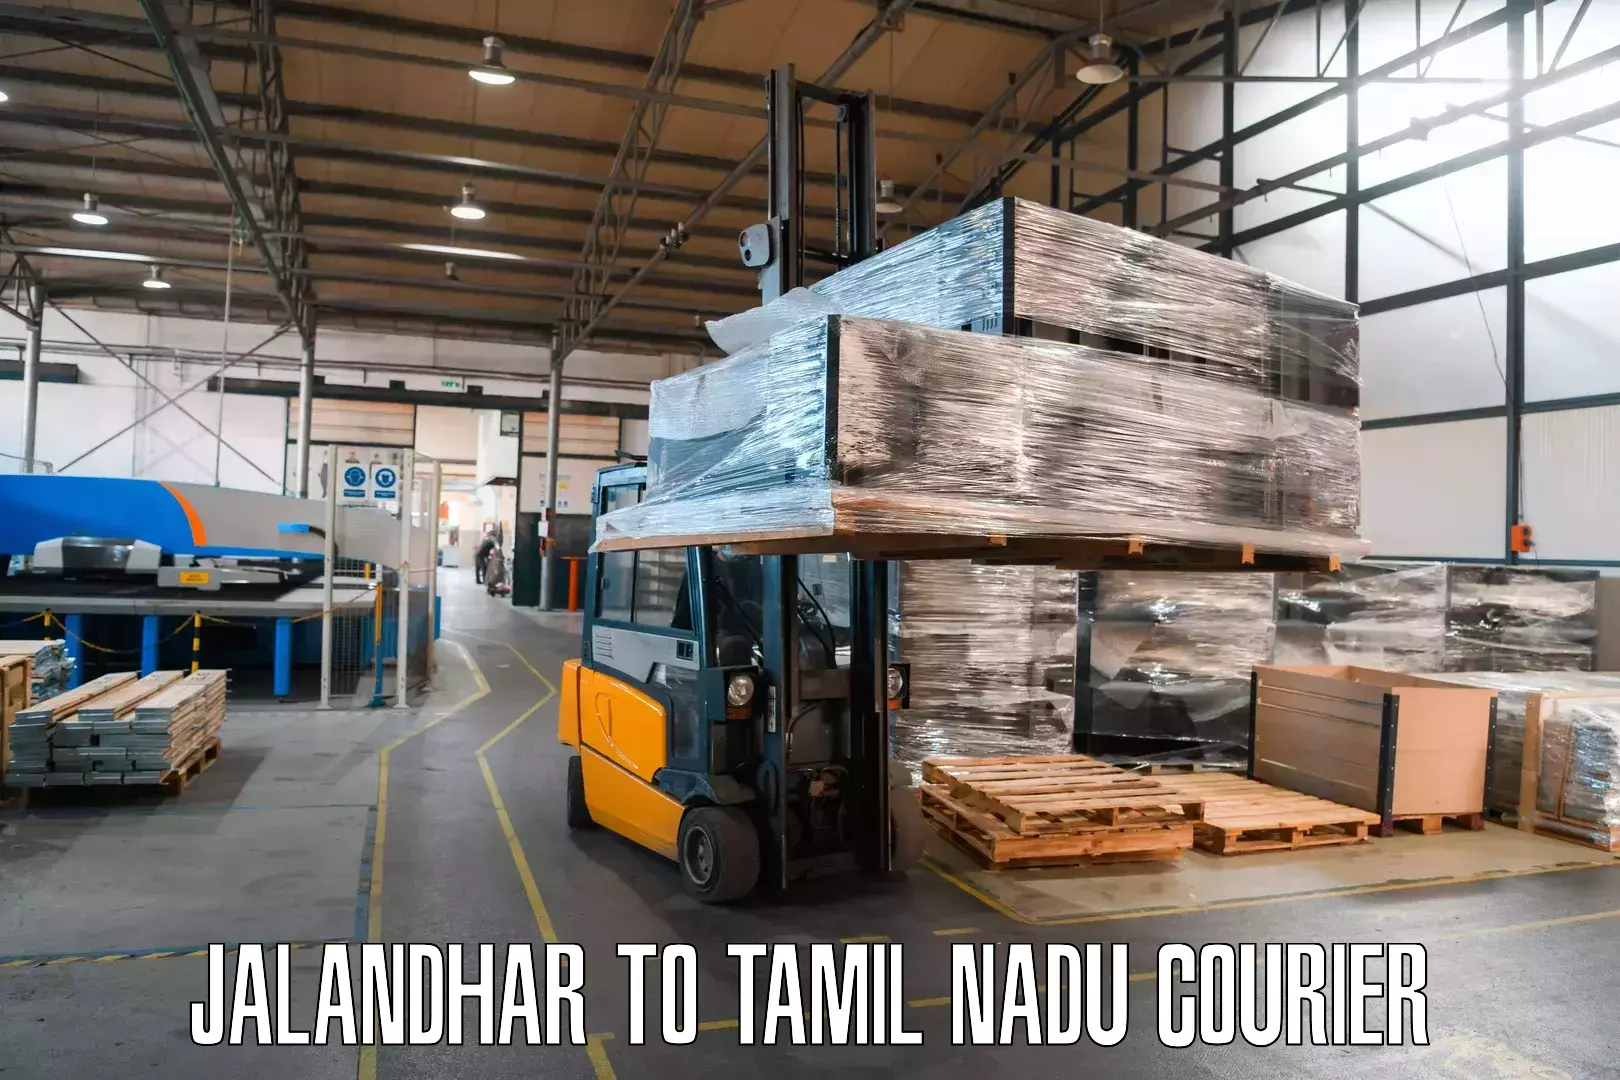 Express logistics providers Jalandhar to Tamil Nadu